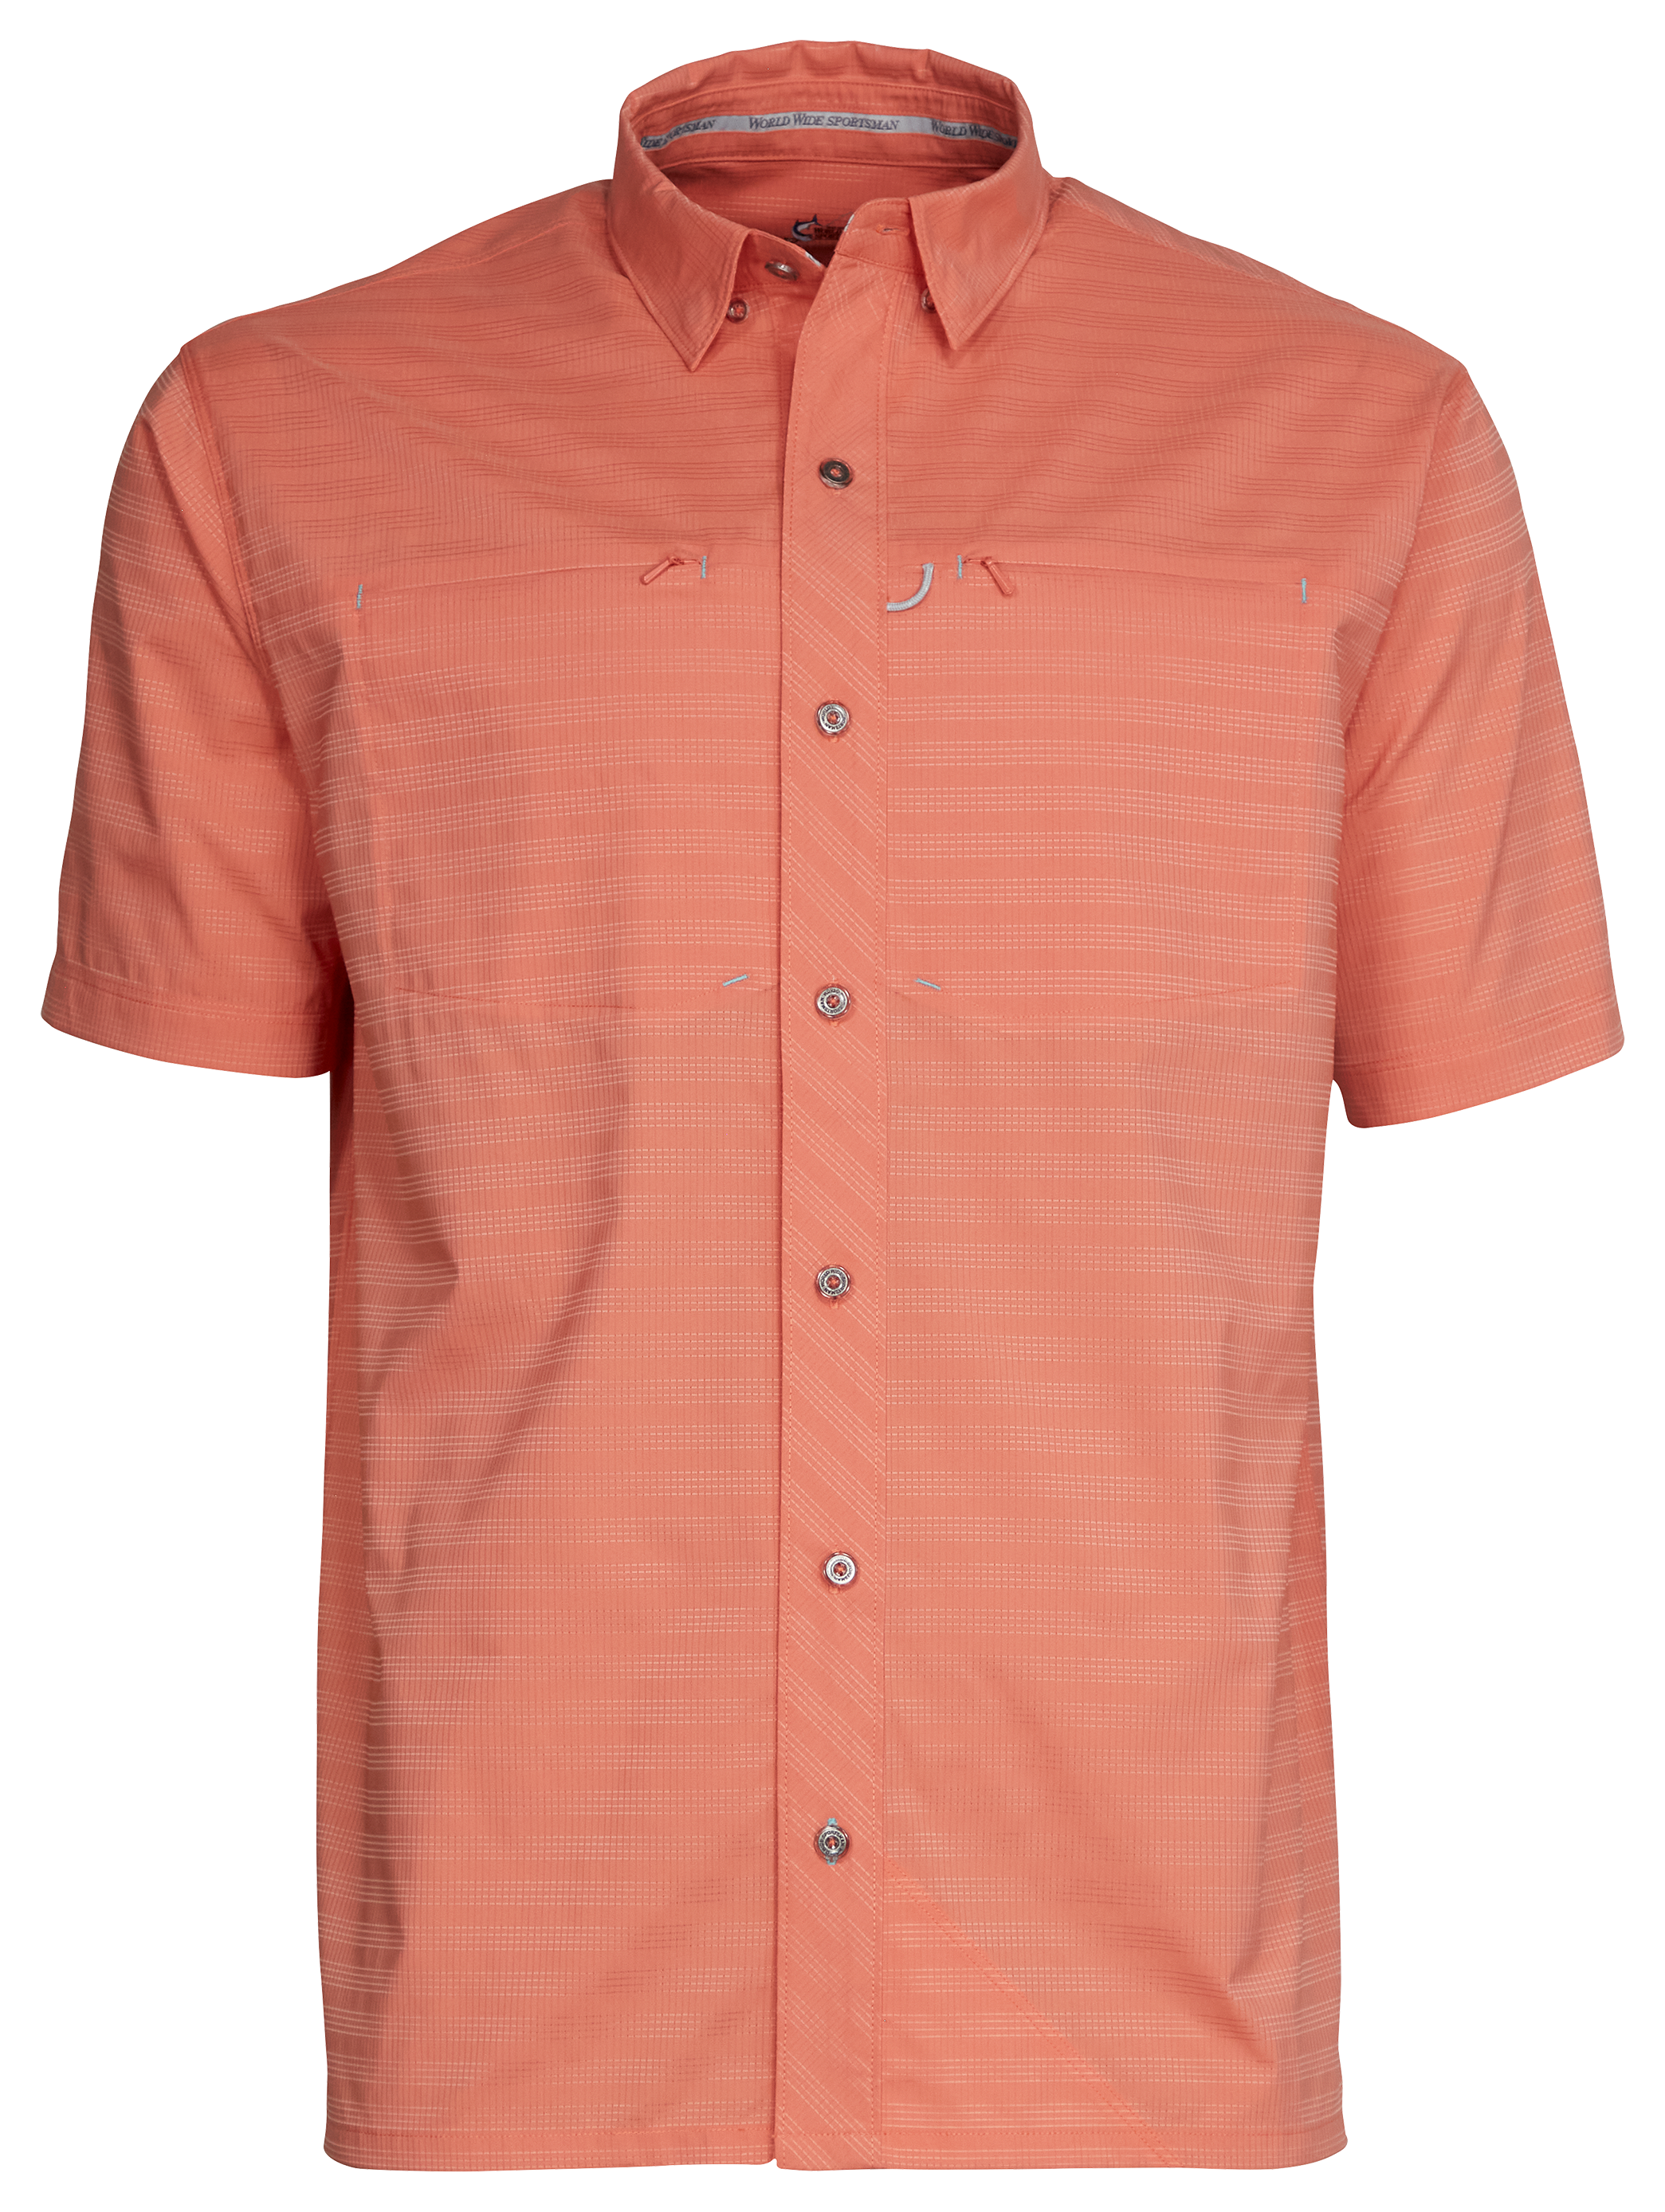 World Wide Sportsman Seacrest 2-Pocket Short-Sleeve Button-Down Shirt for Men - Crabapple - S